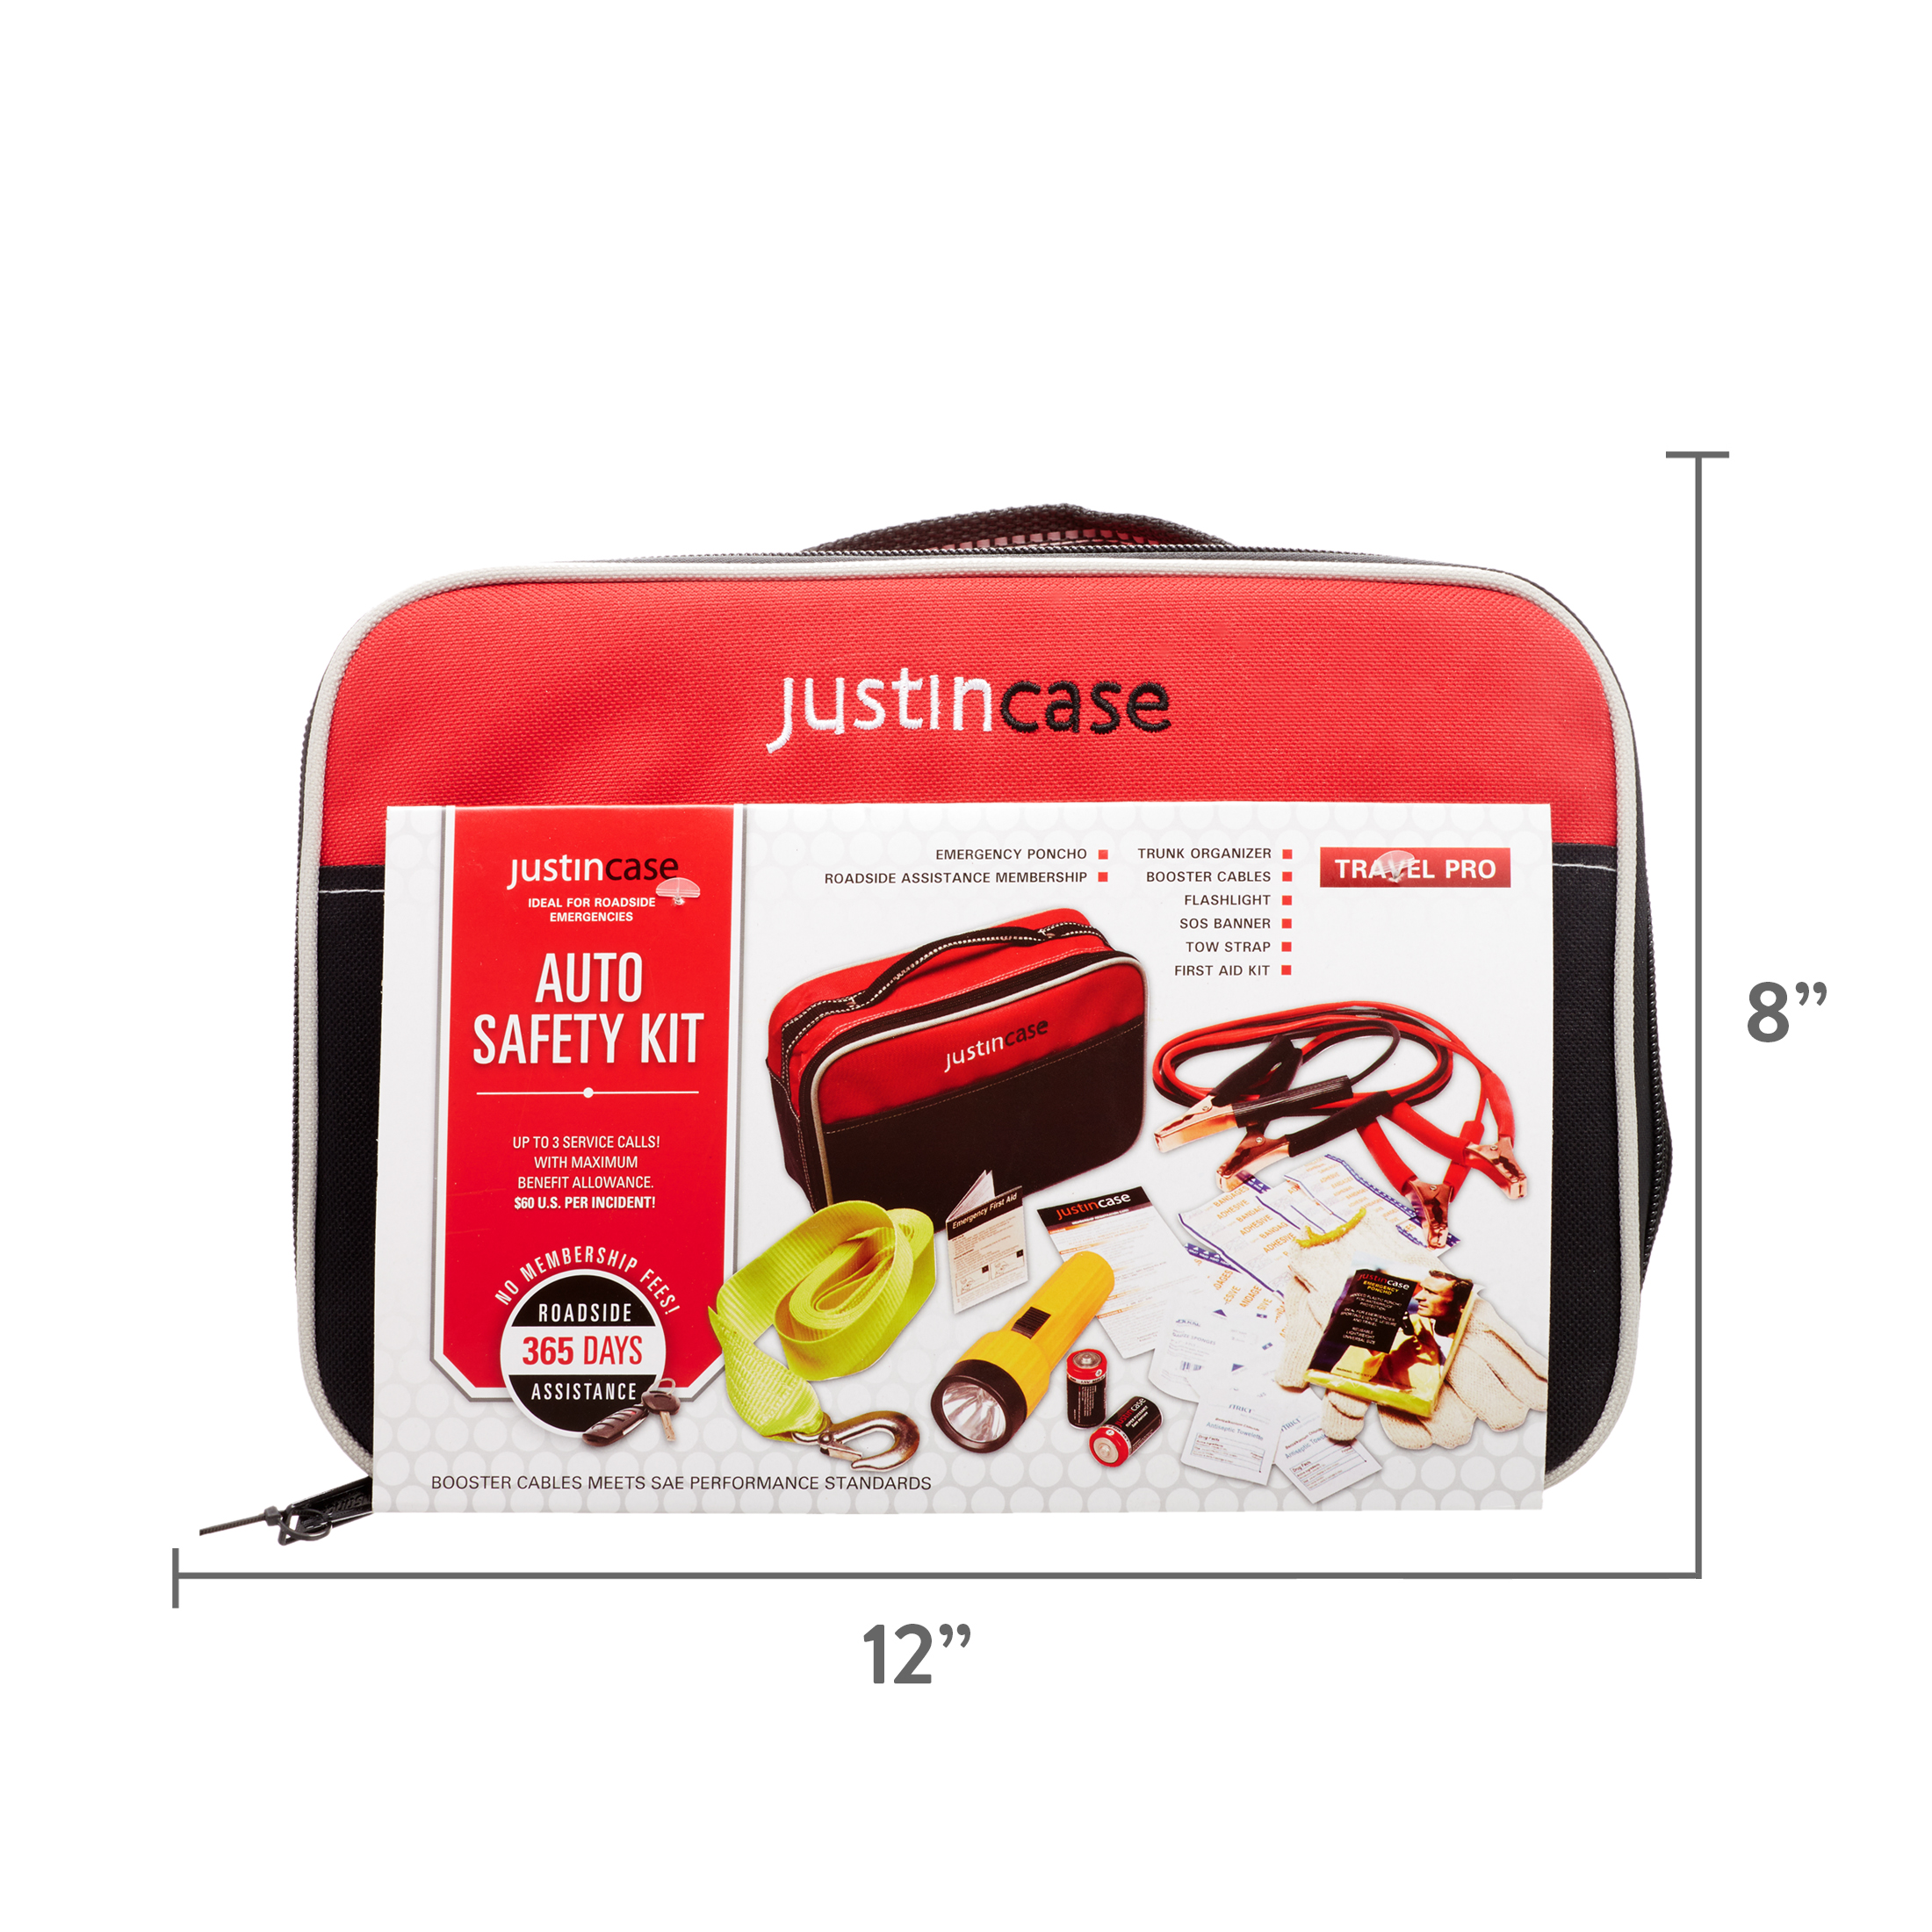 Justincase Travel Pro Auto Safety Kit - image 4 of 7